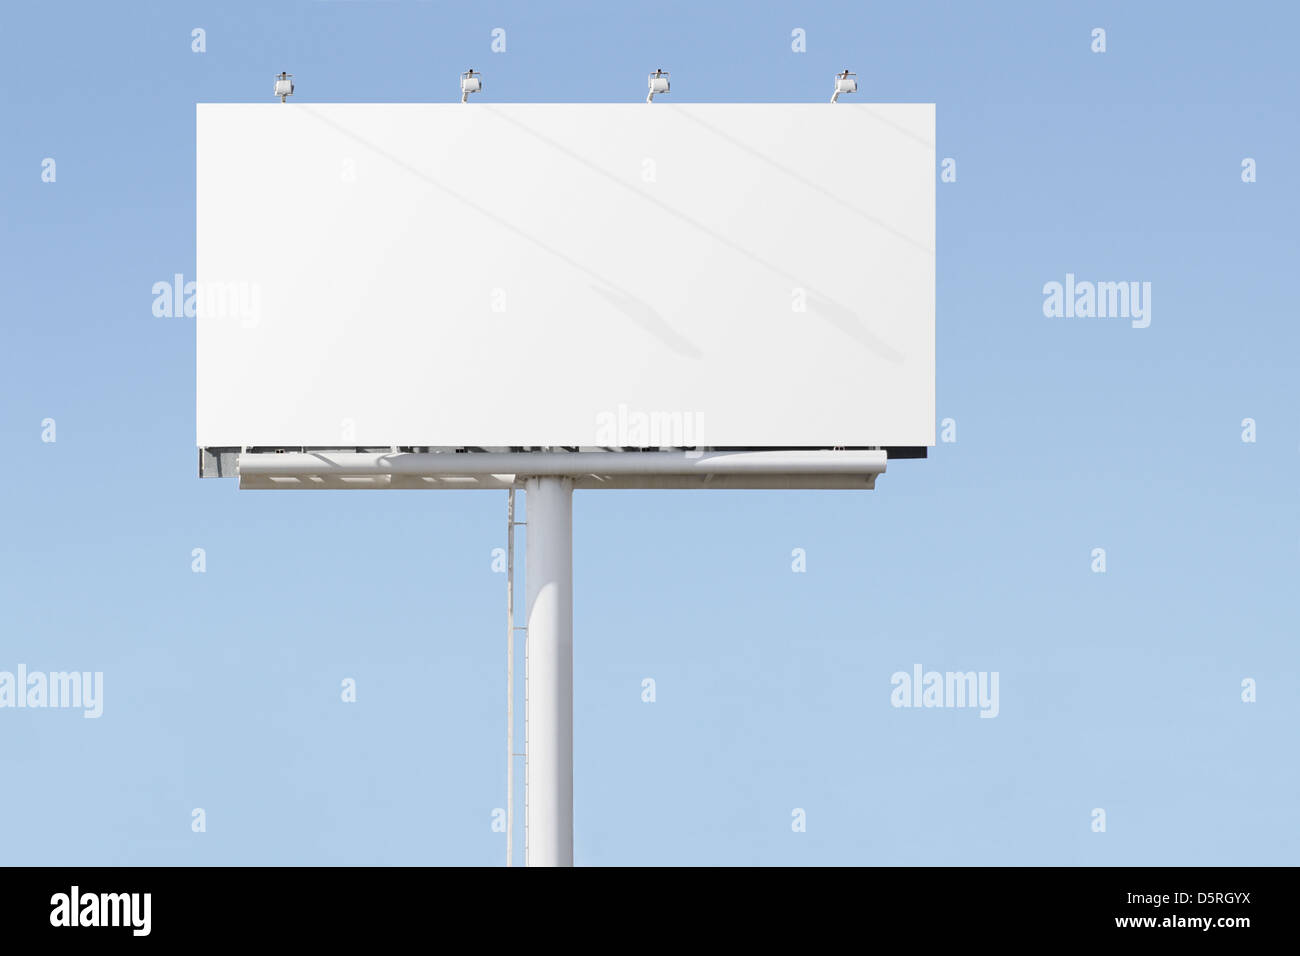 Big advertising billboard panel sign Stock Photo